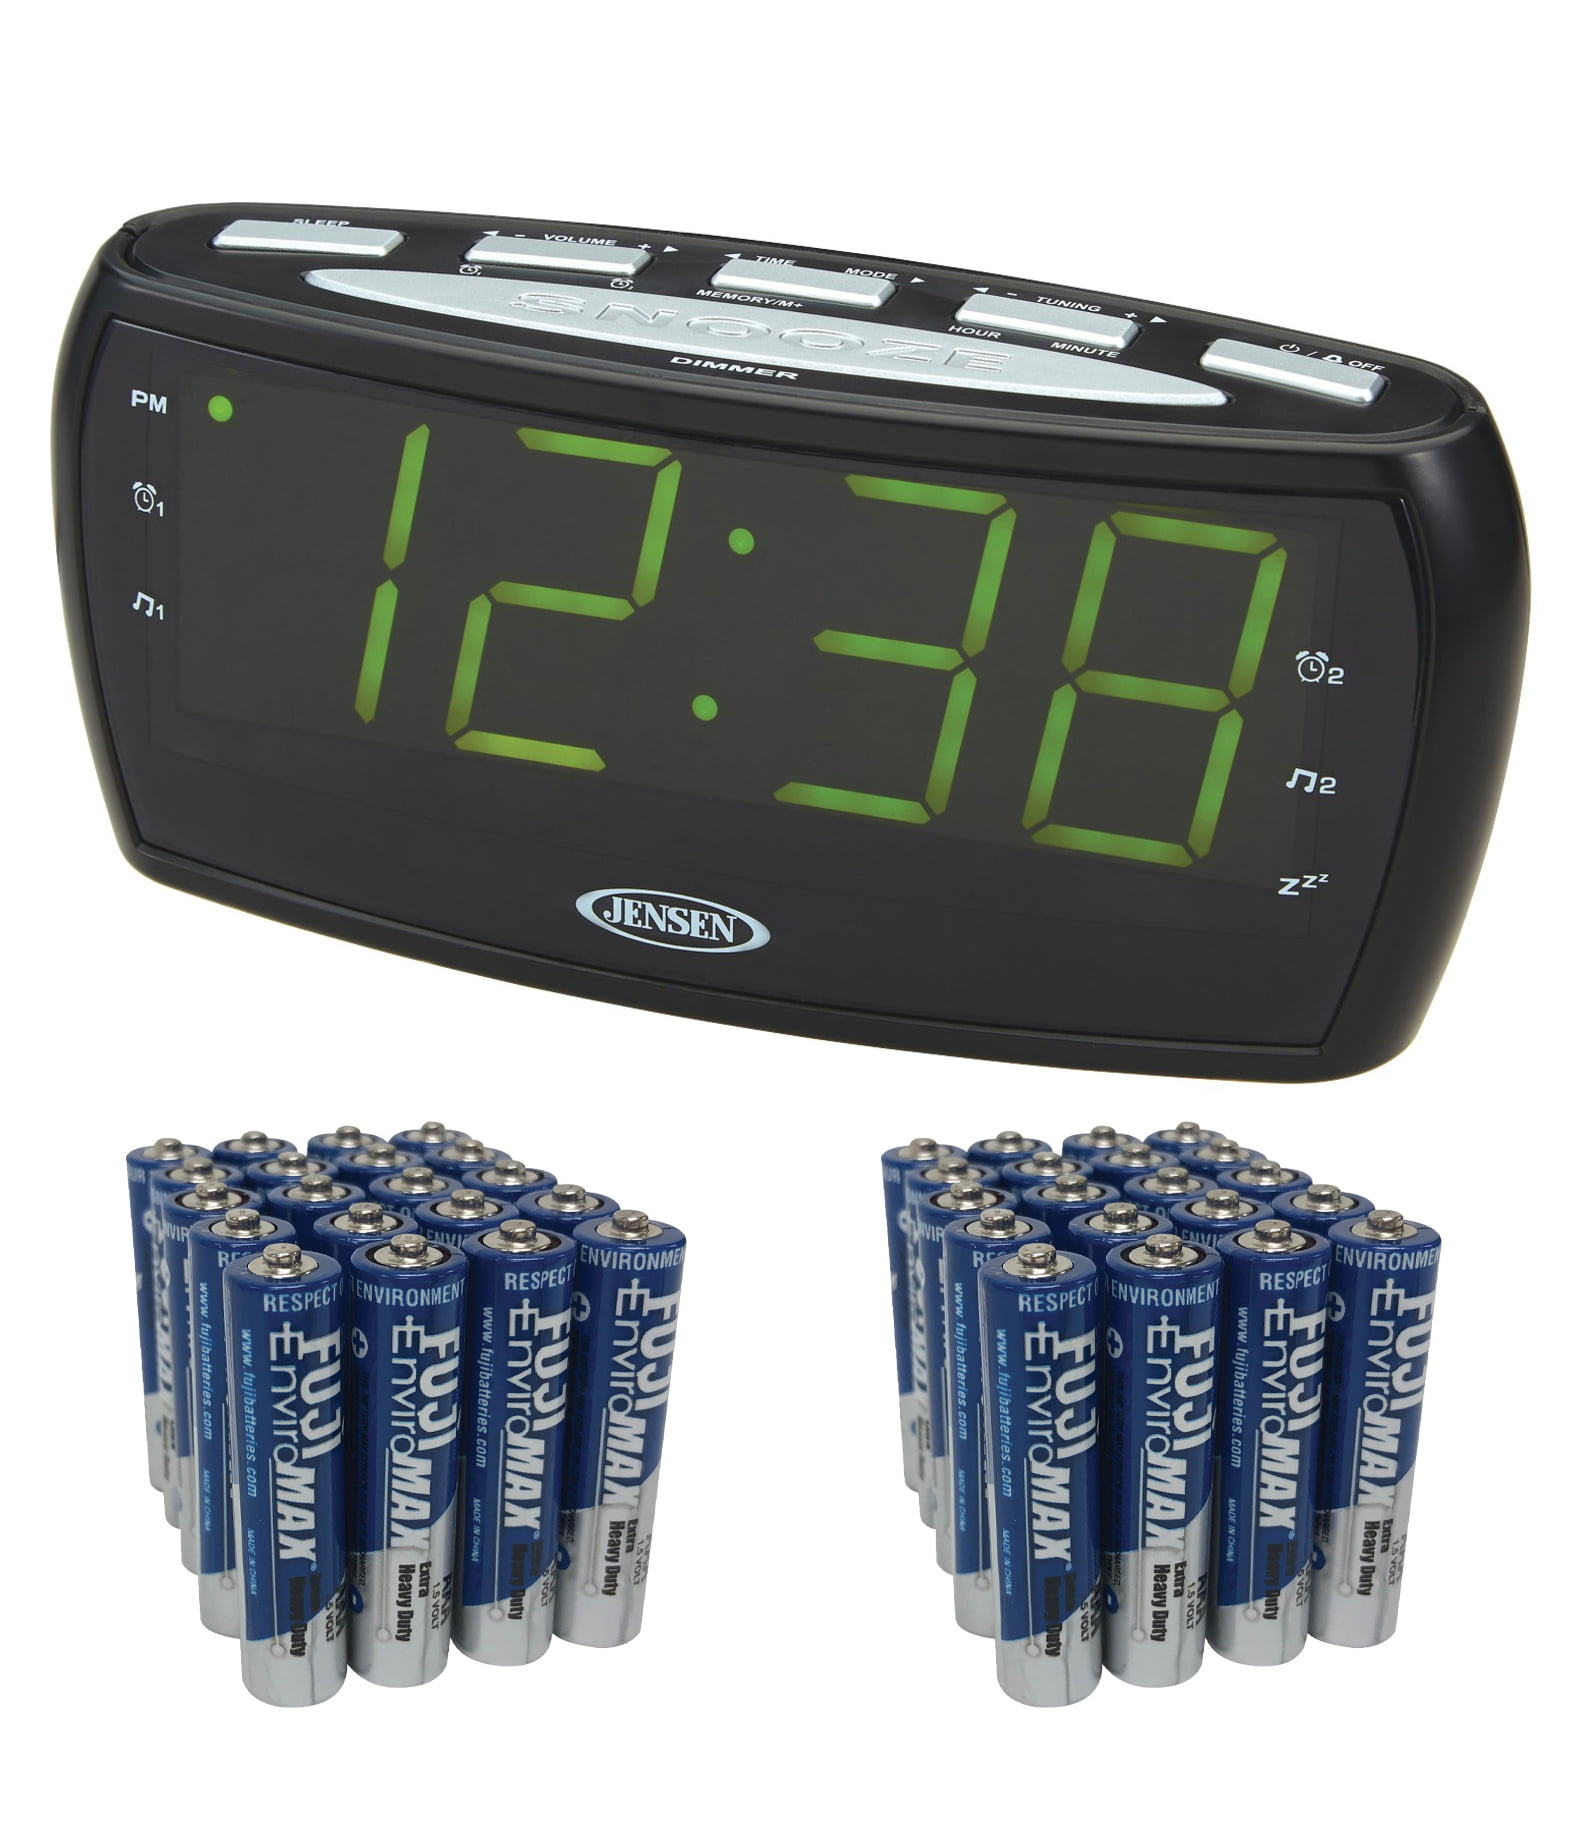 Jensen Jcr-208 Am/Fm Alarm Clock Radio With Auto Time Set 